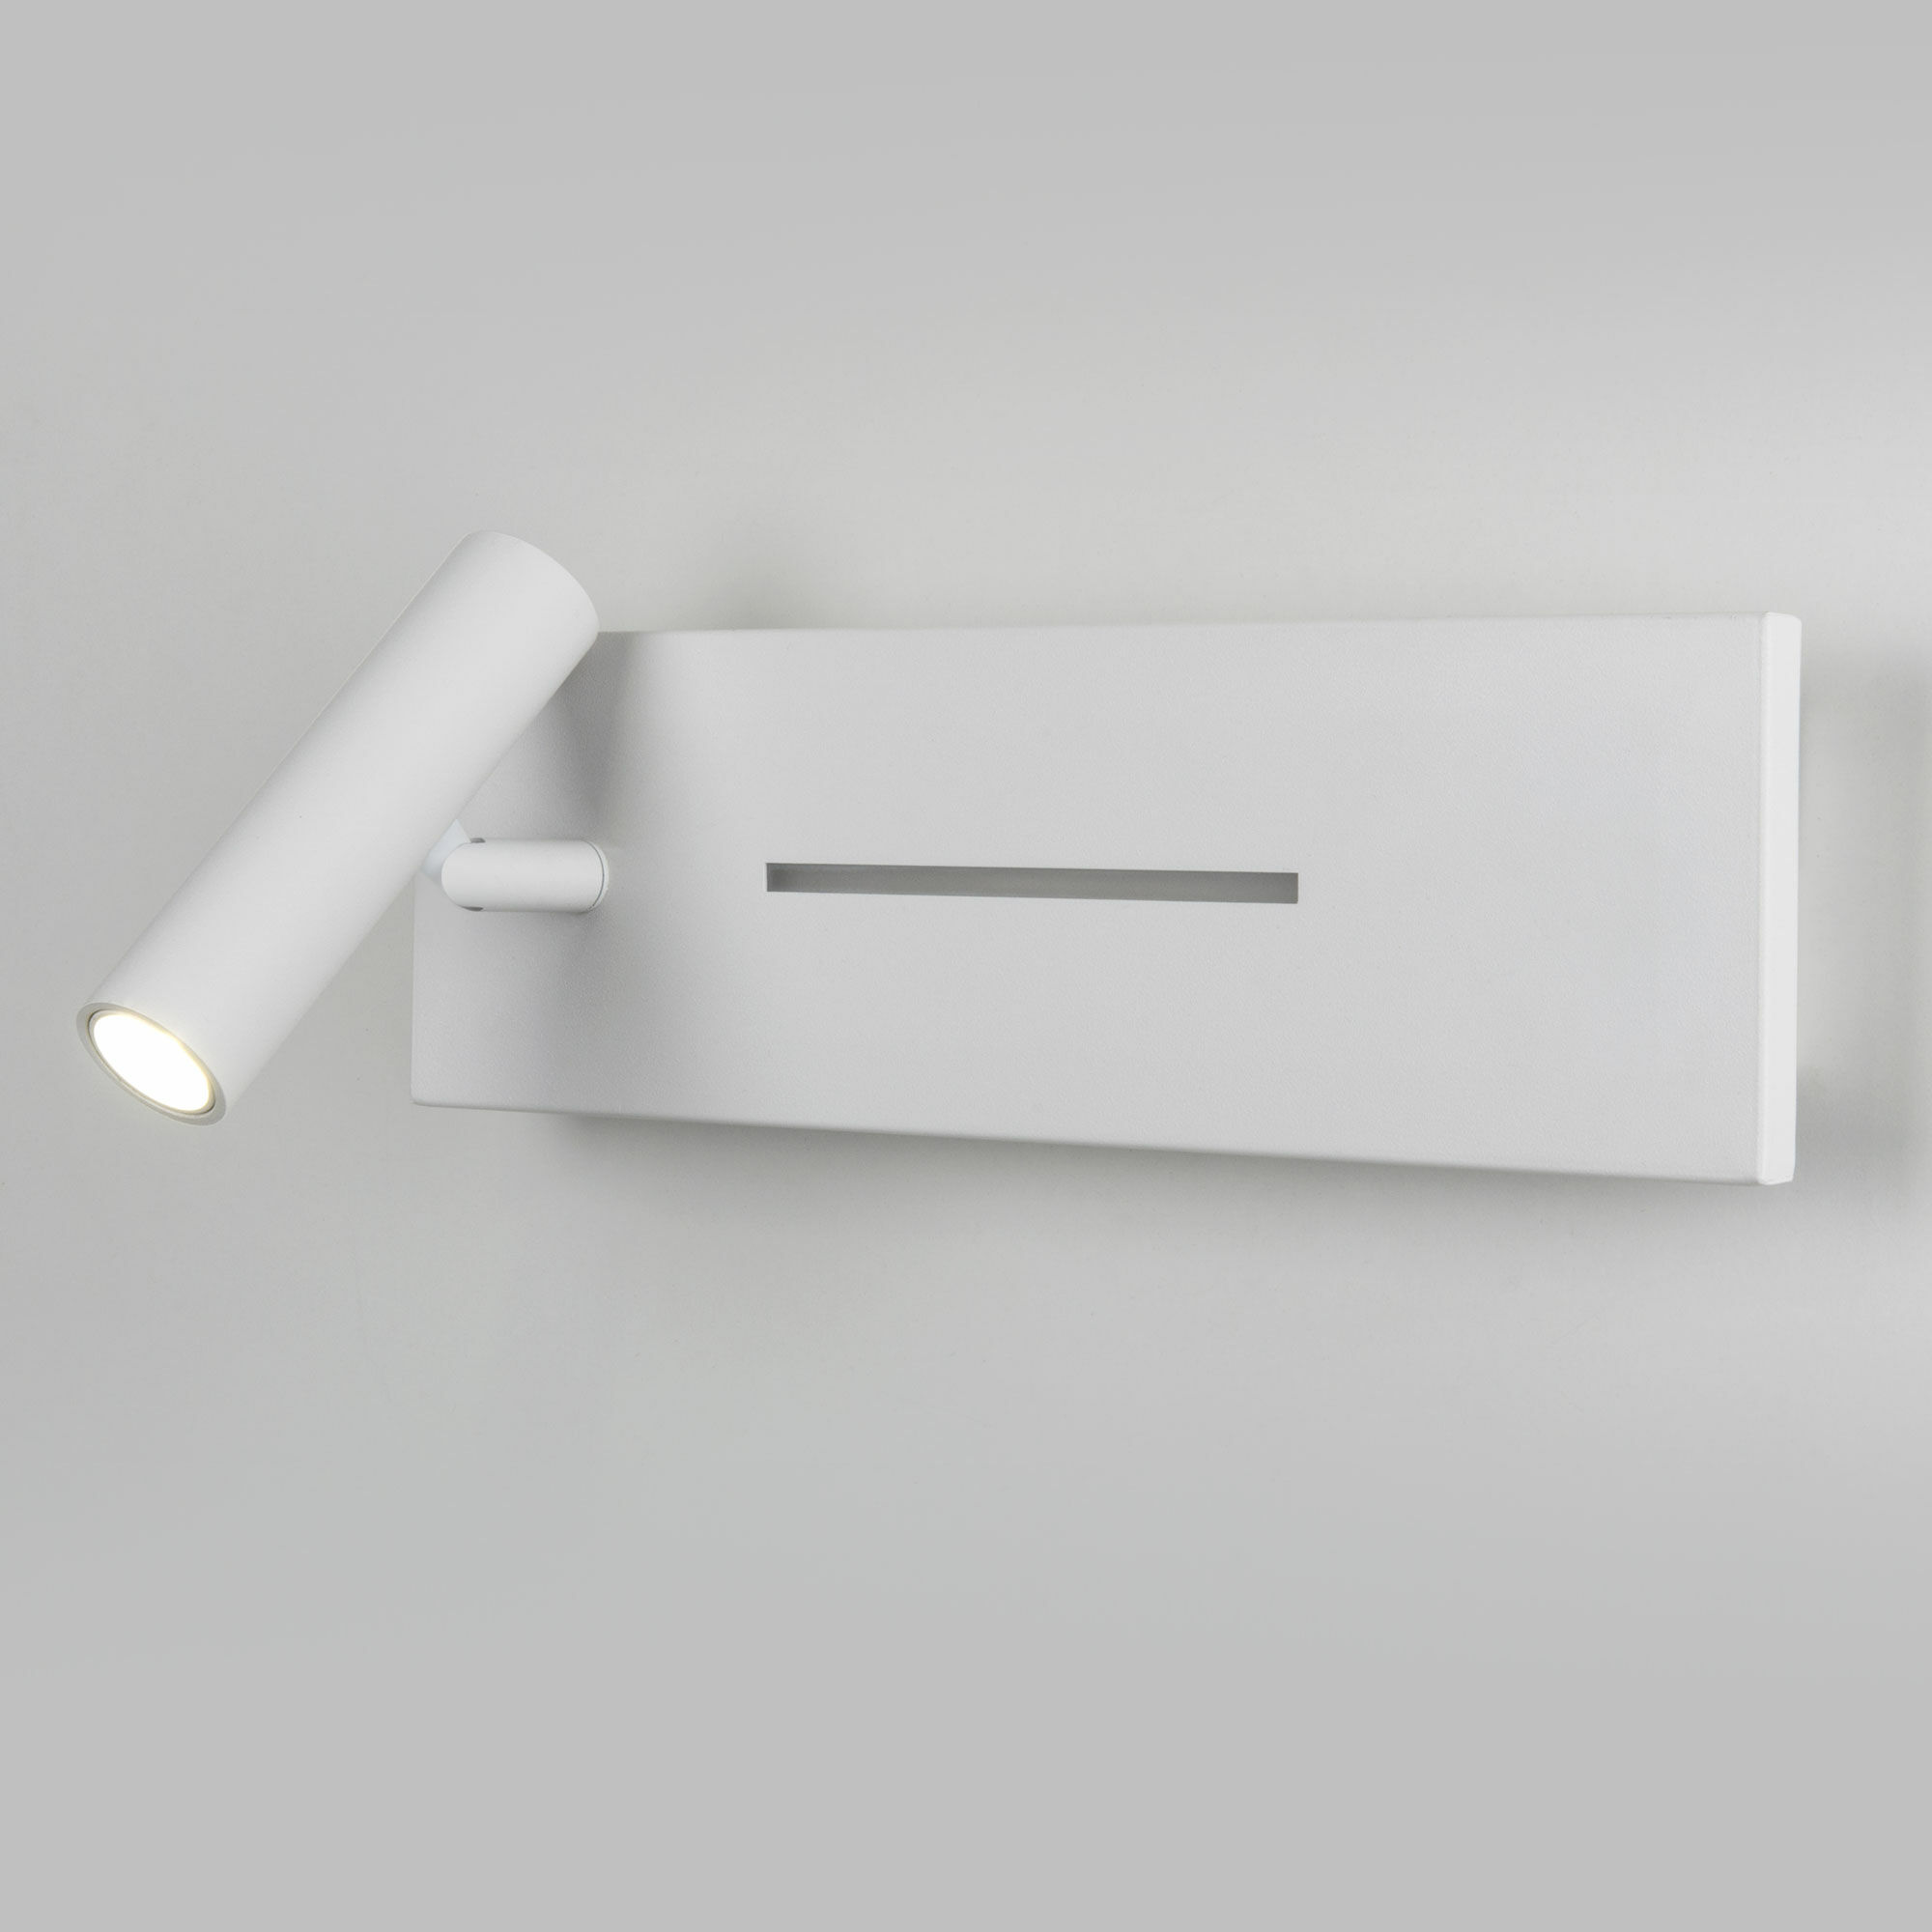 Светильник настенный c USB/Type C разъемами Elektrostandard Tuo LED MRL LED 1117 белый